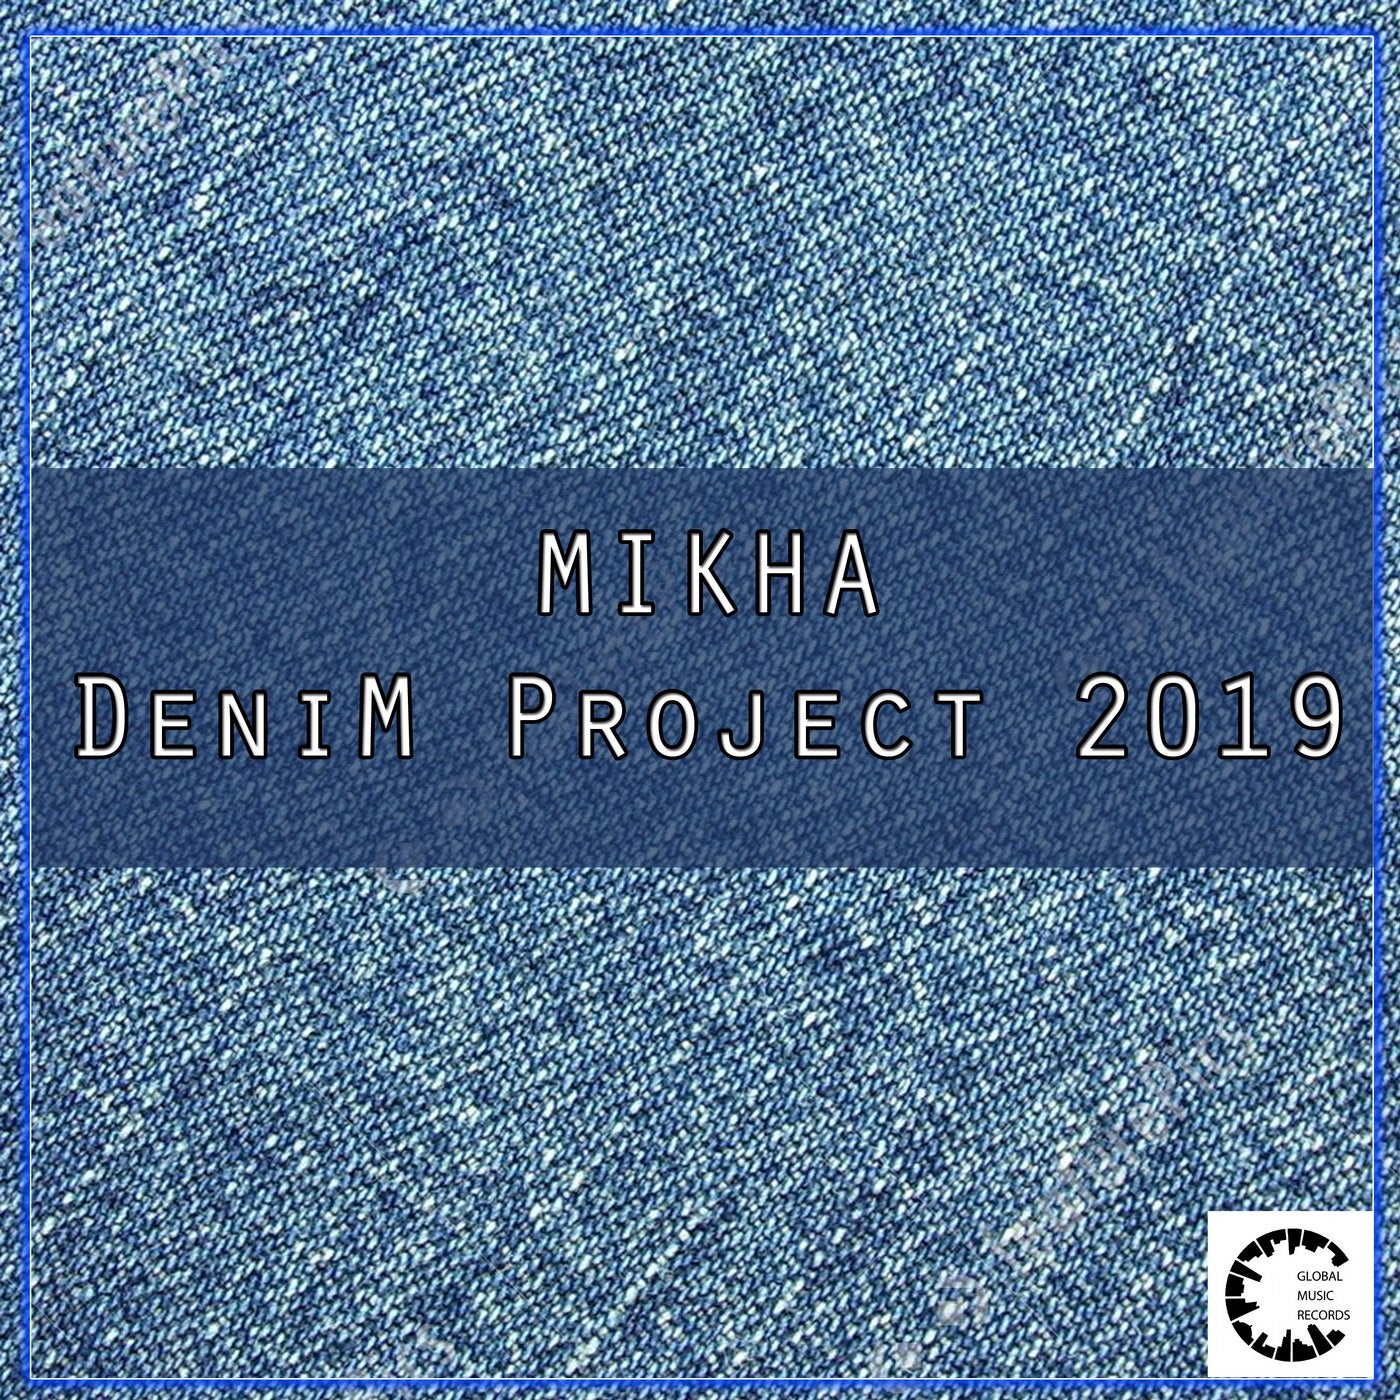 Denim Project 2019